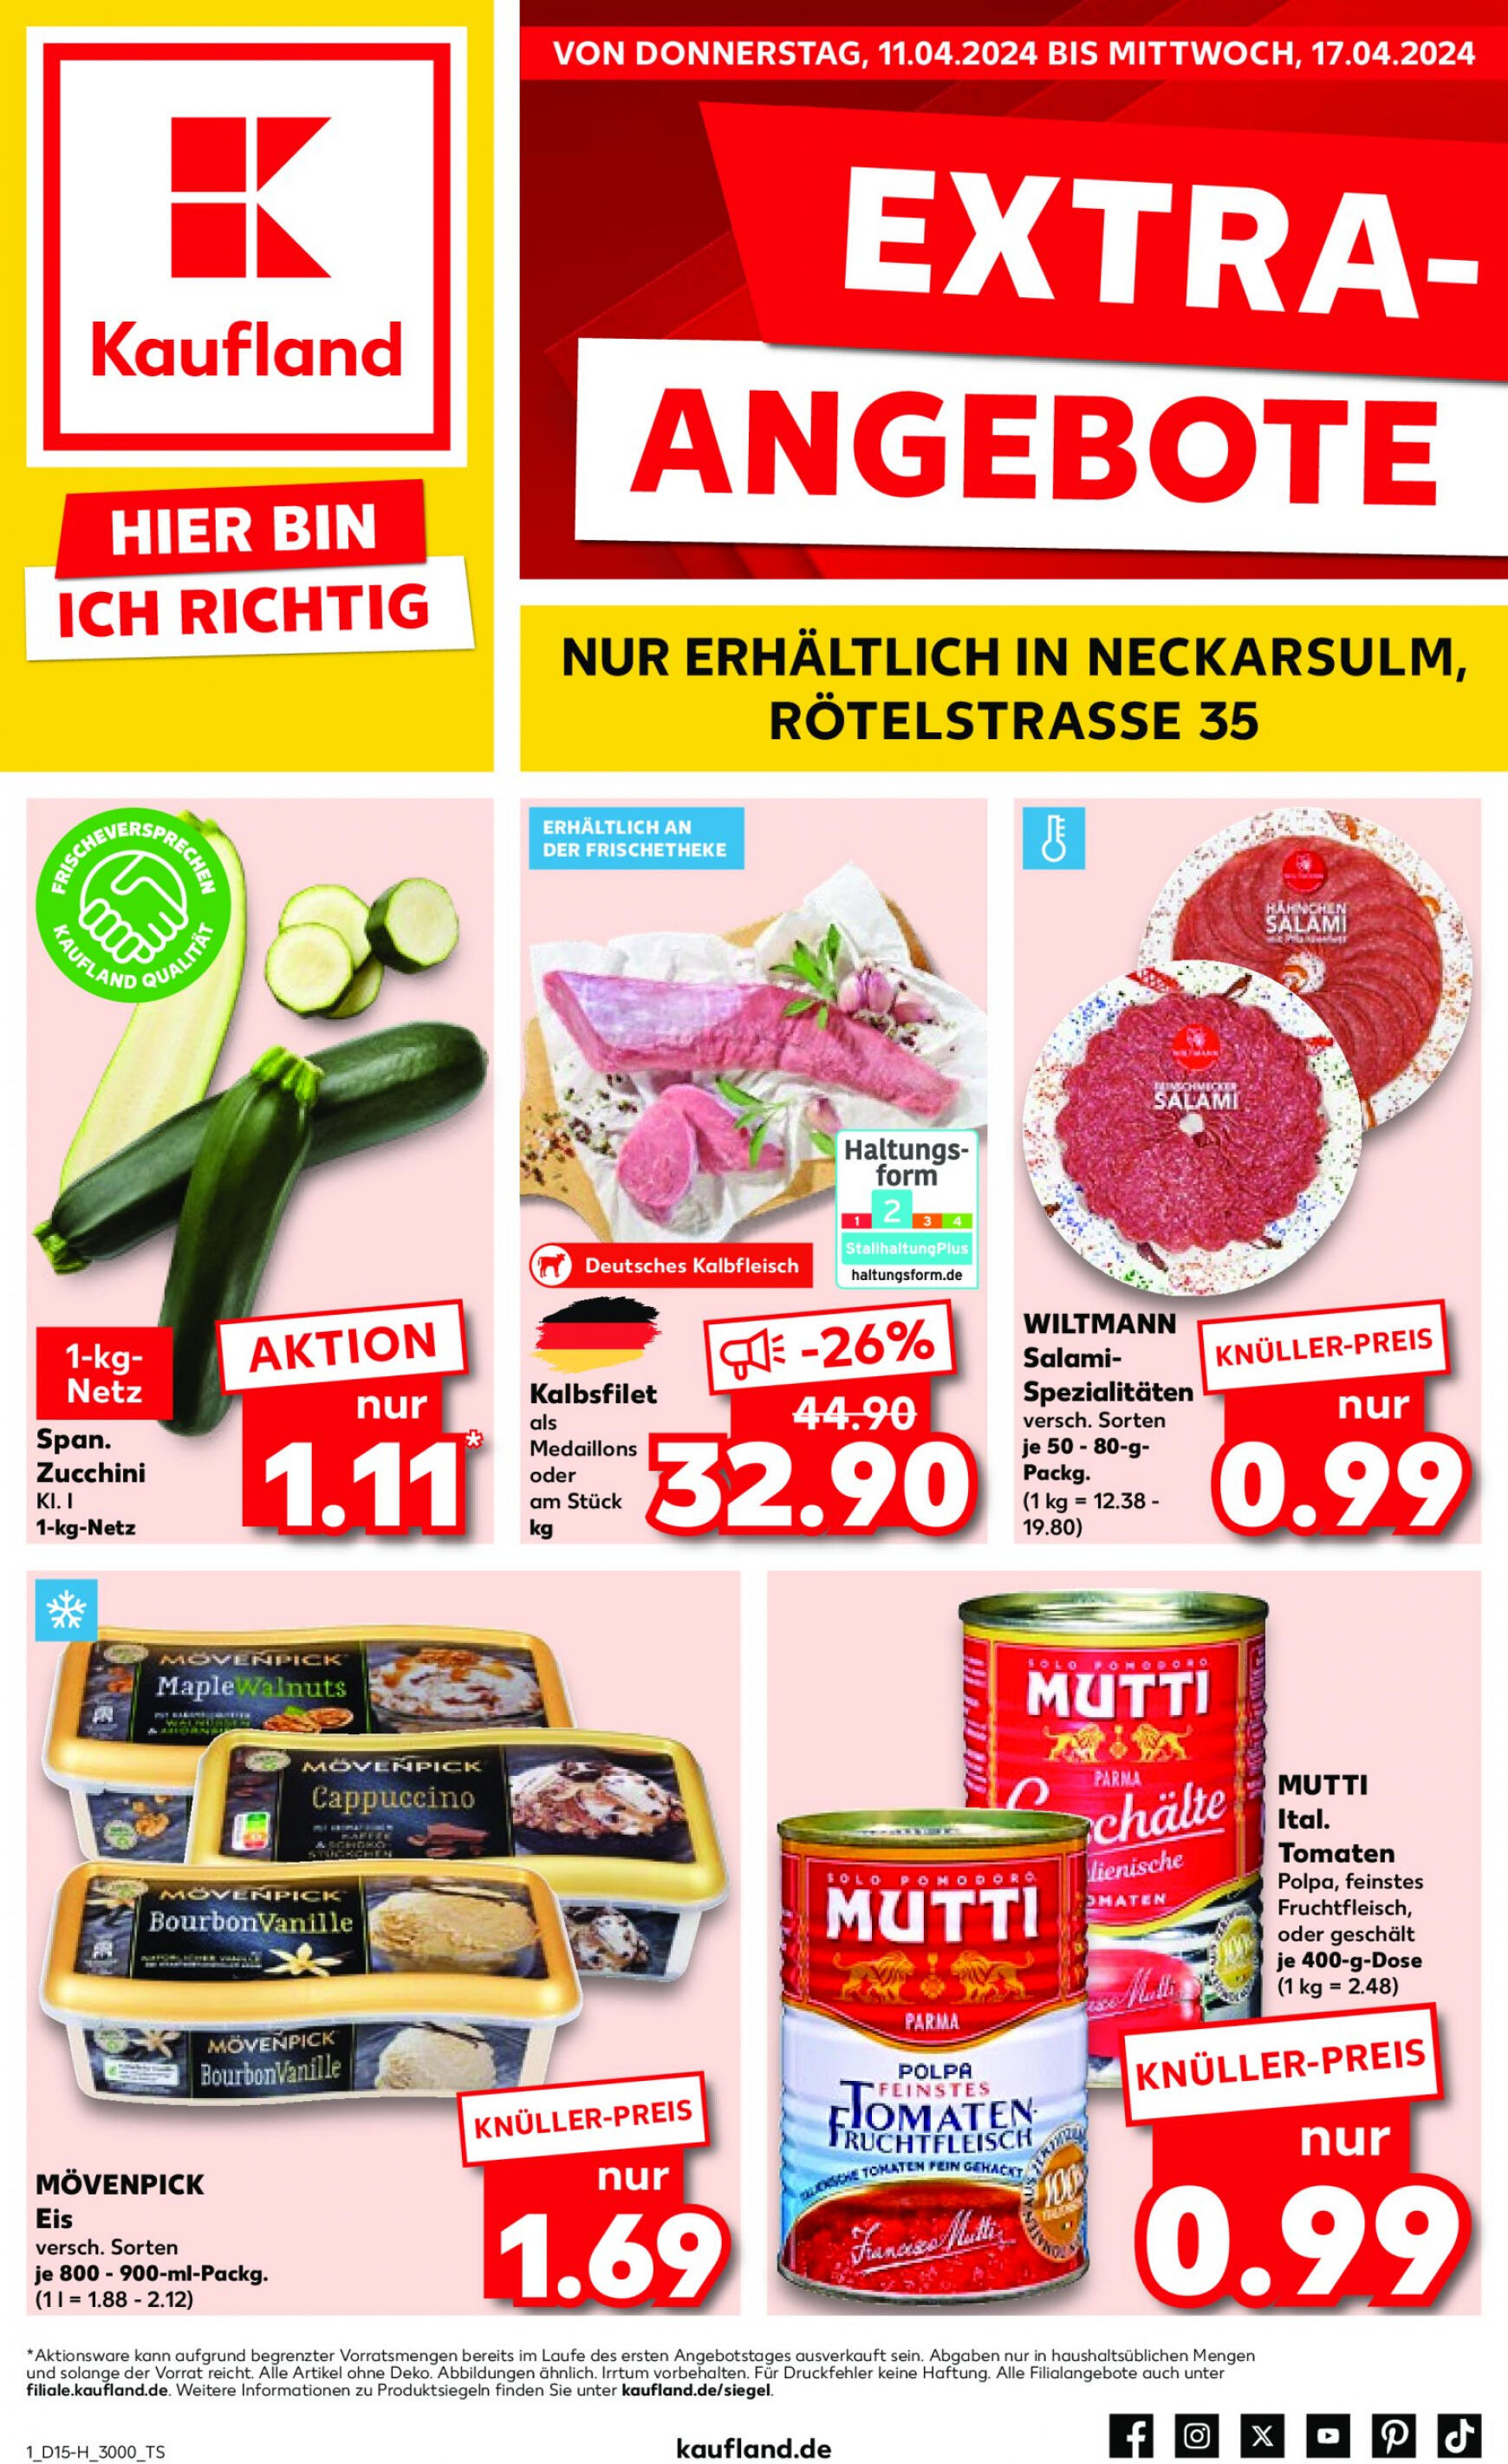 kaufland - Flyer Kaufland - Extra Angebote aktuell 11.04. - 17.04. - page: 1